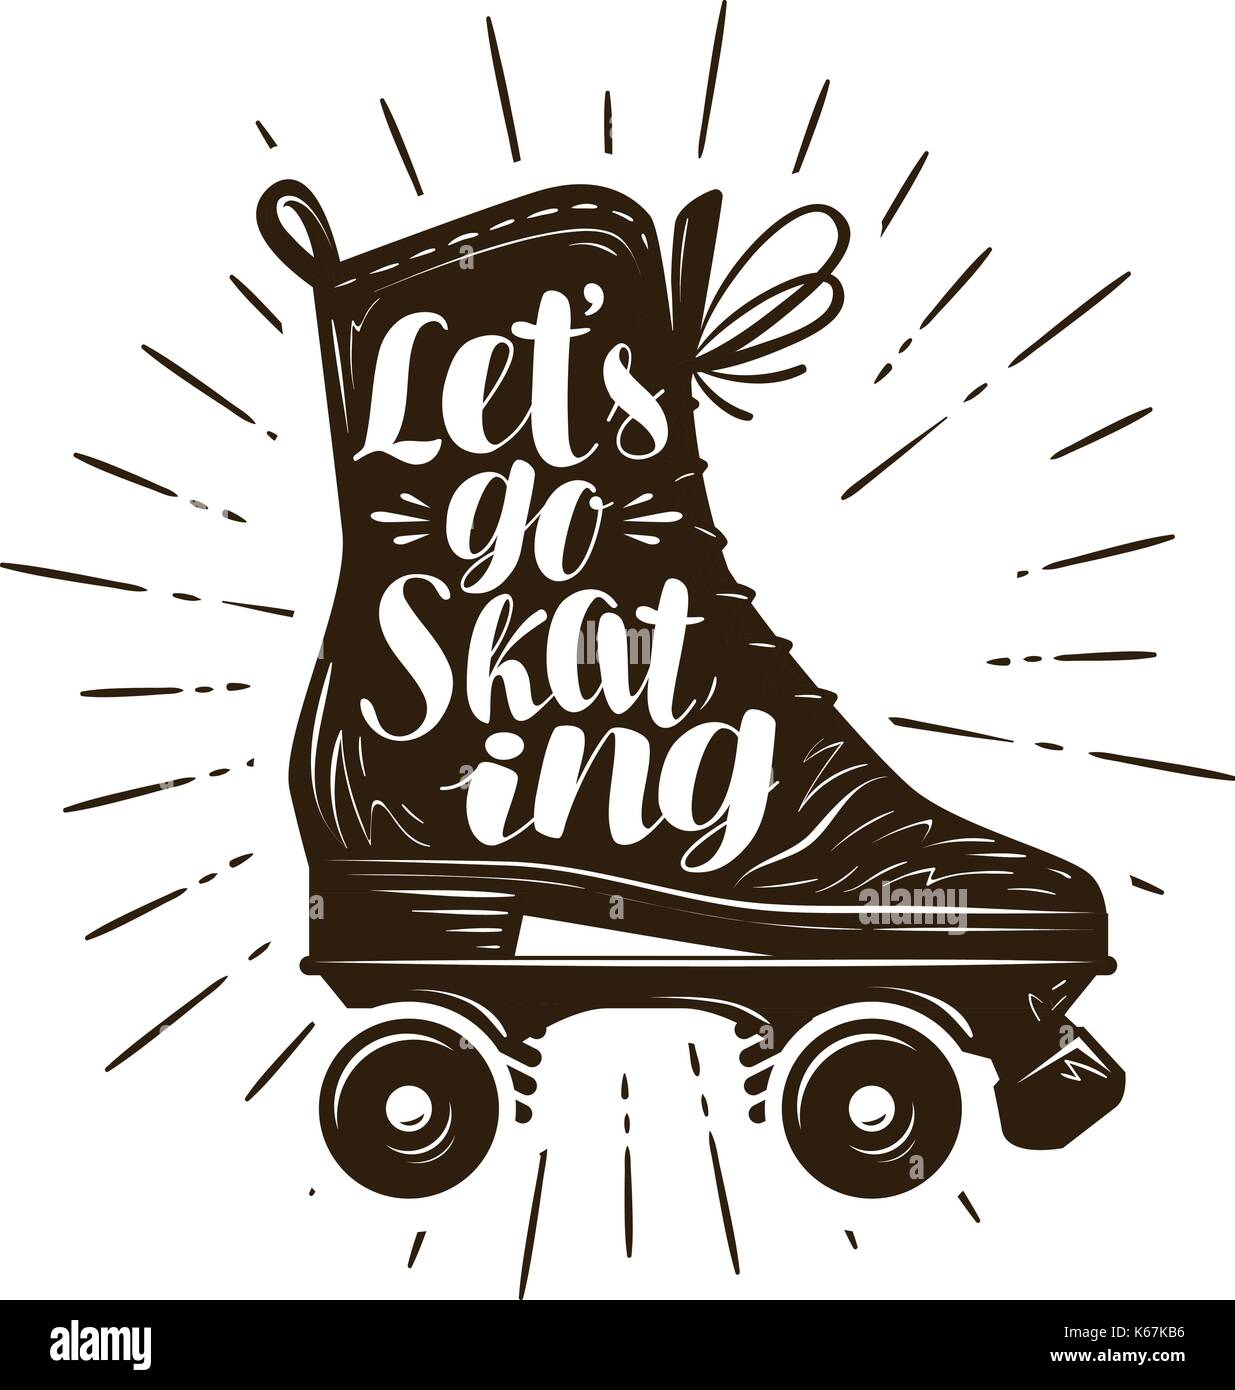 Let's go skating, banner. Typographic design. Handwritten lettering vector illustration Stock Vector